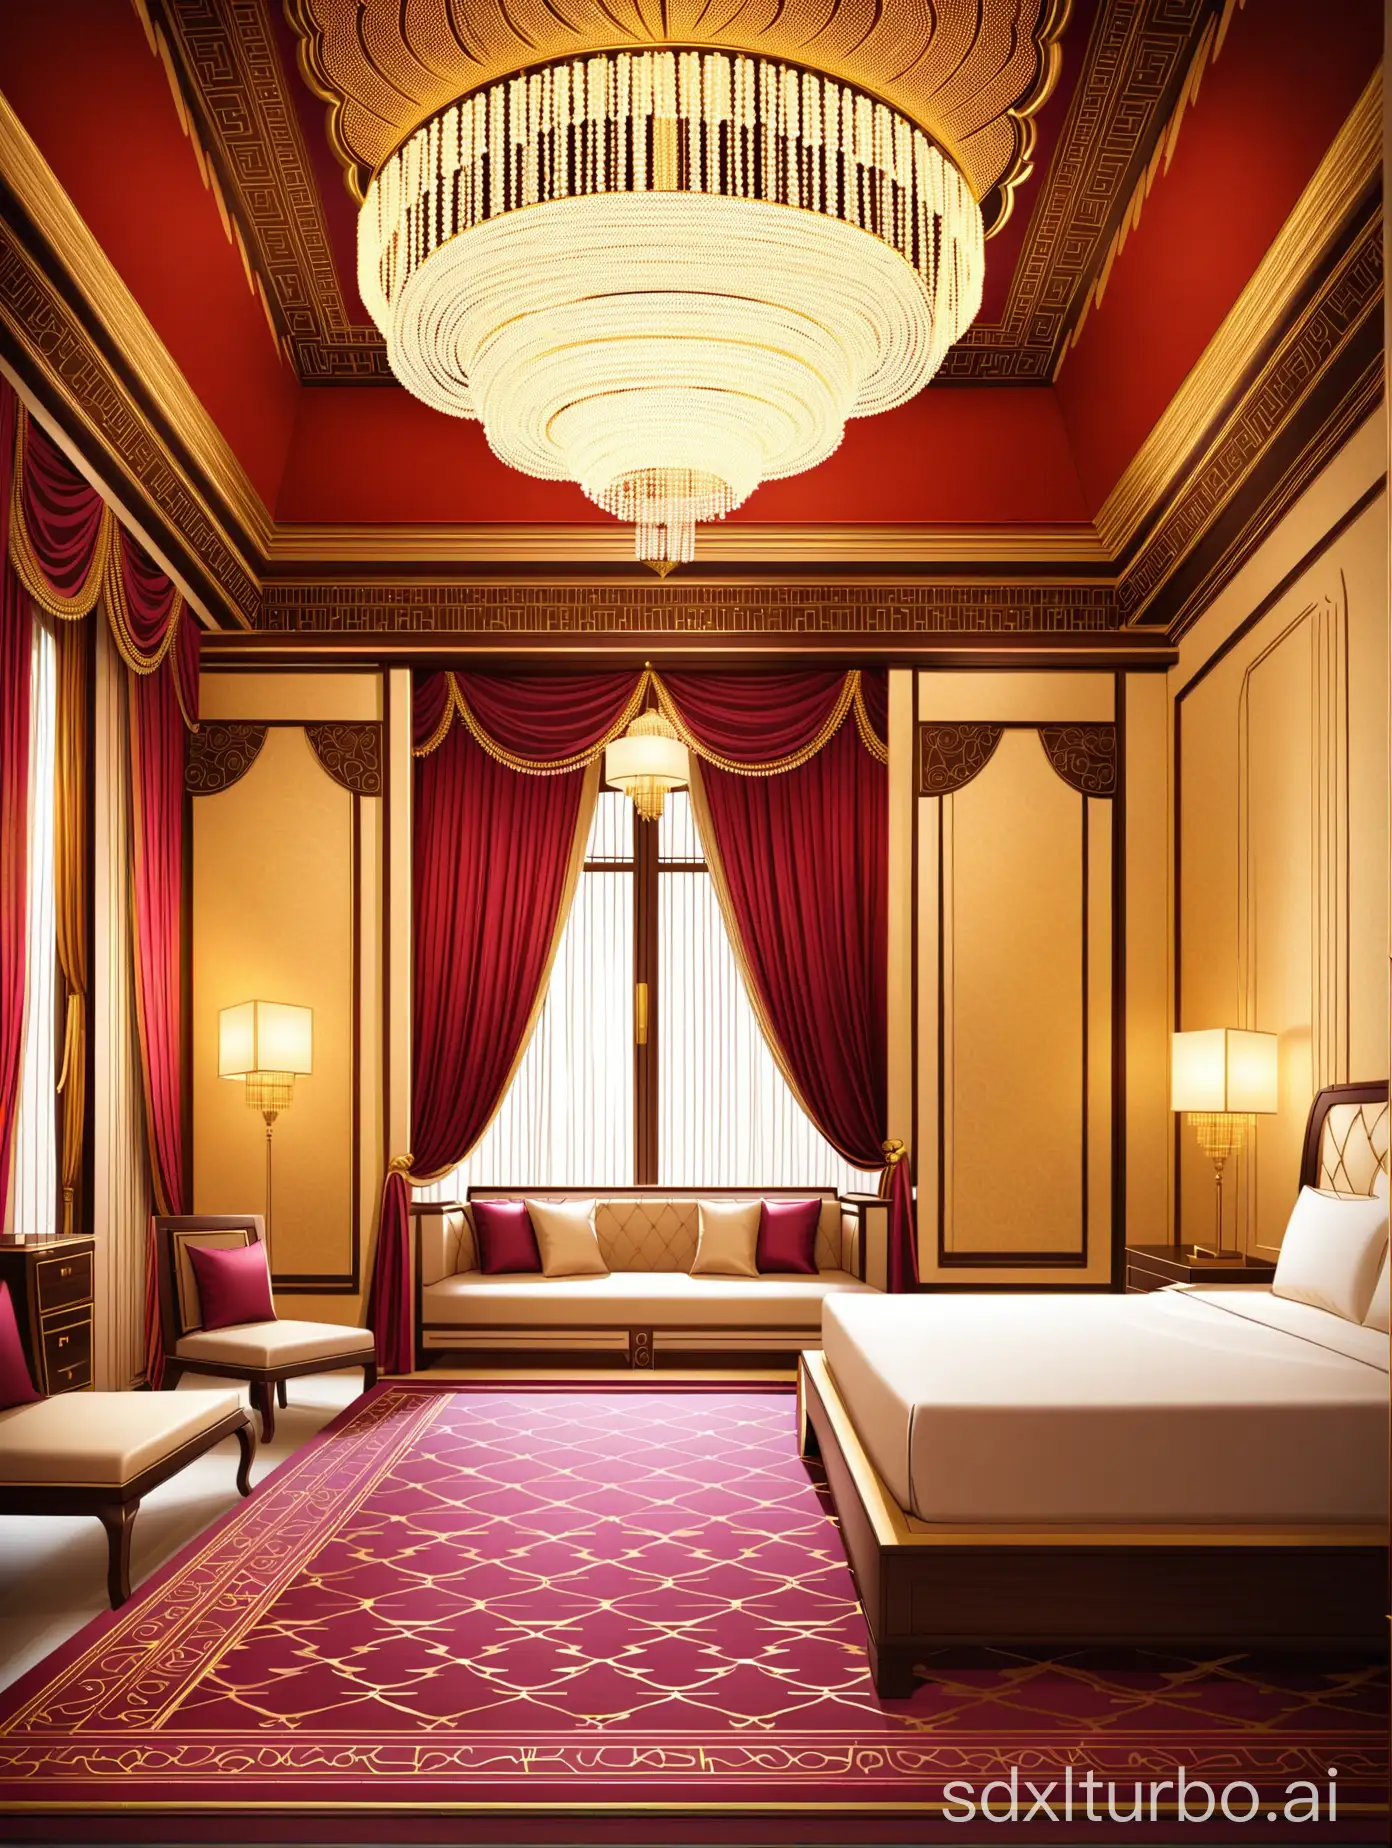 luxurious palace sleep room, luxury decorations everywhere